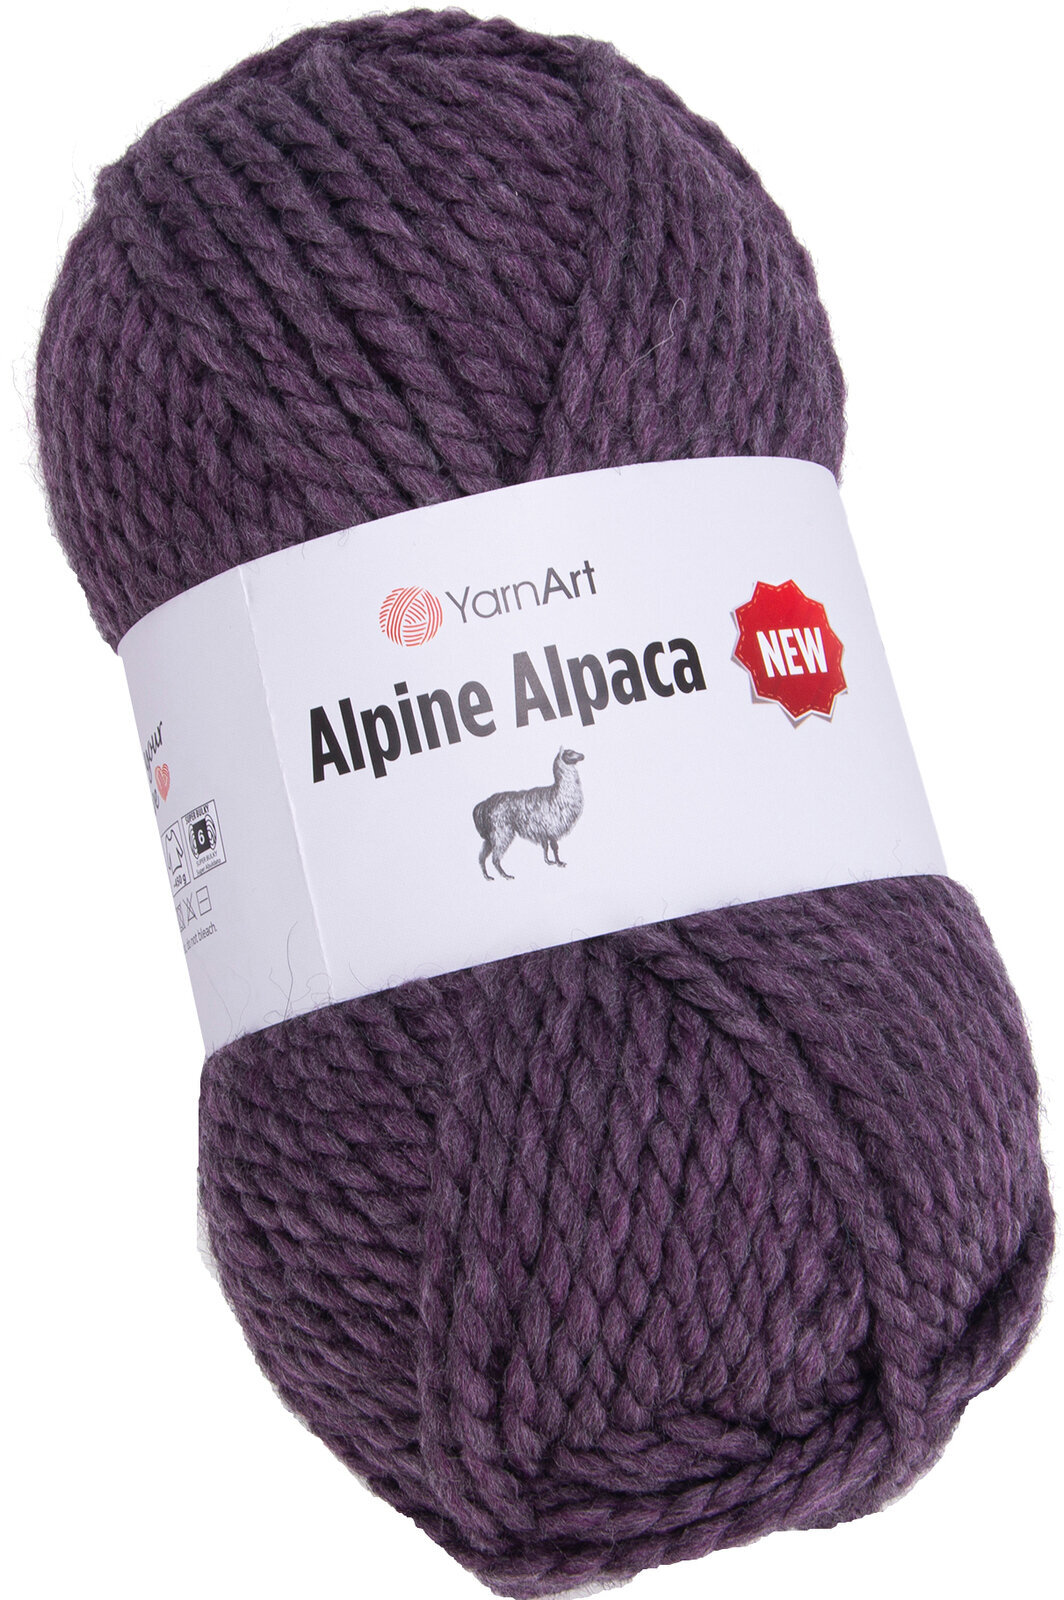 Knitting Yarn Yarn Art Alpine Alpaca New 1451 Knitting Yarn